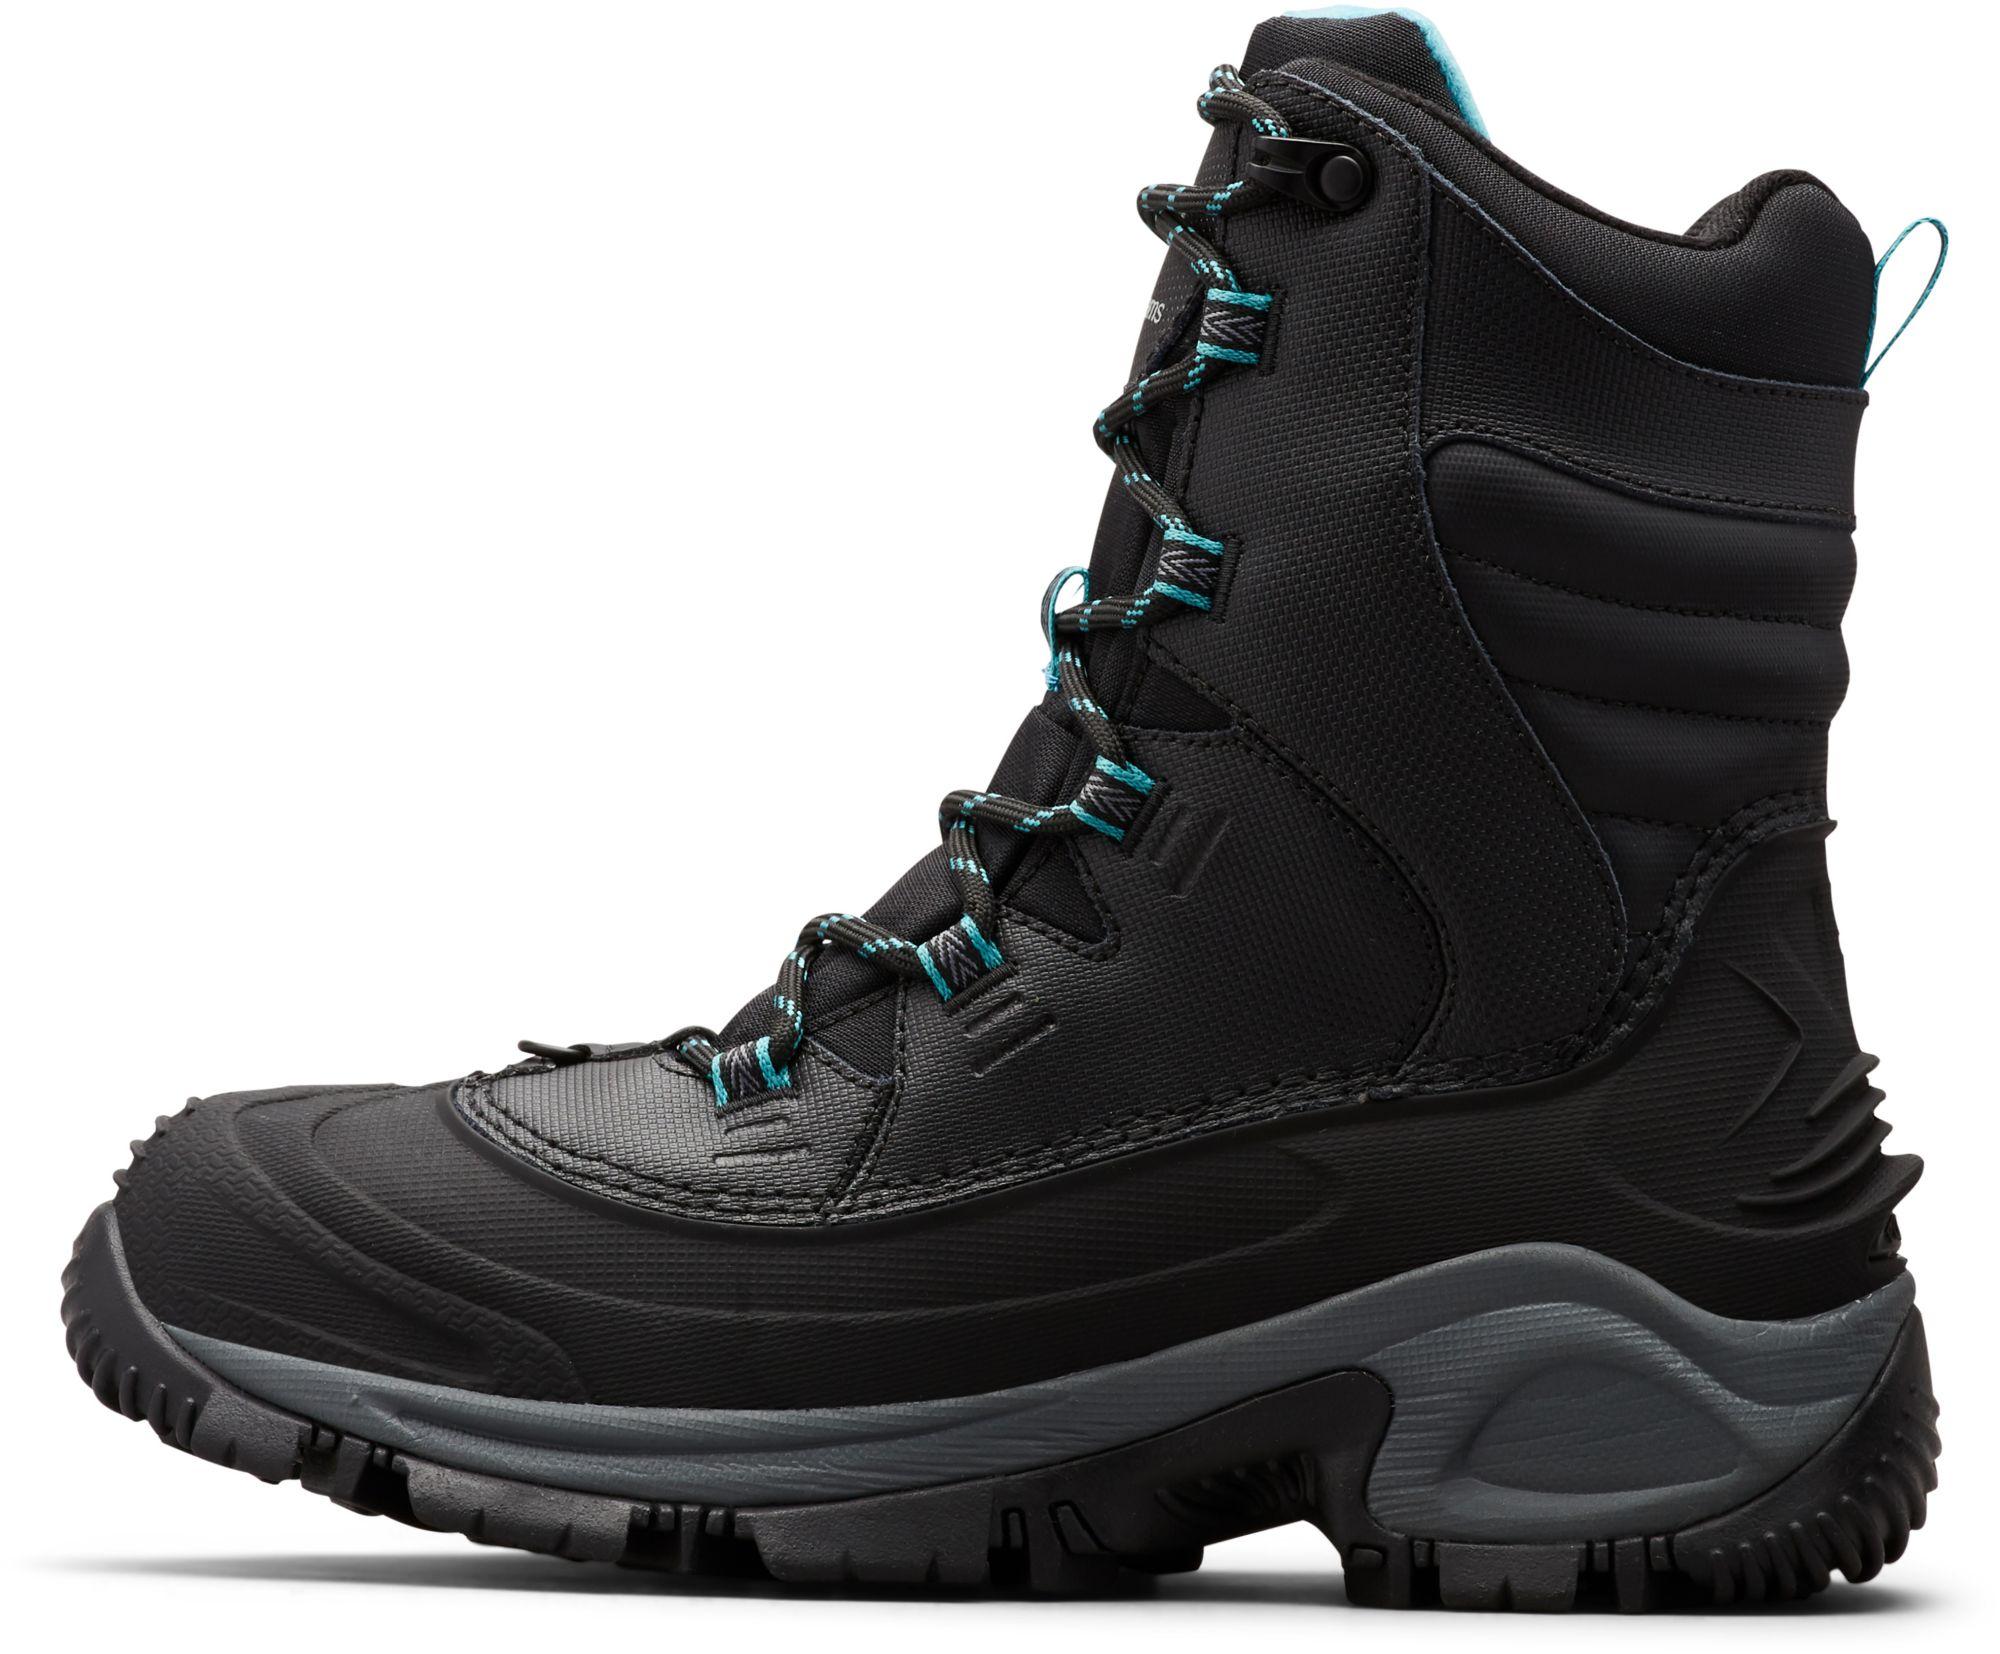 Columbia Leather Bugaboot Iii 200g Waterproof Winter Boots in Black - Lyst